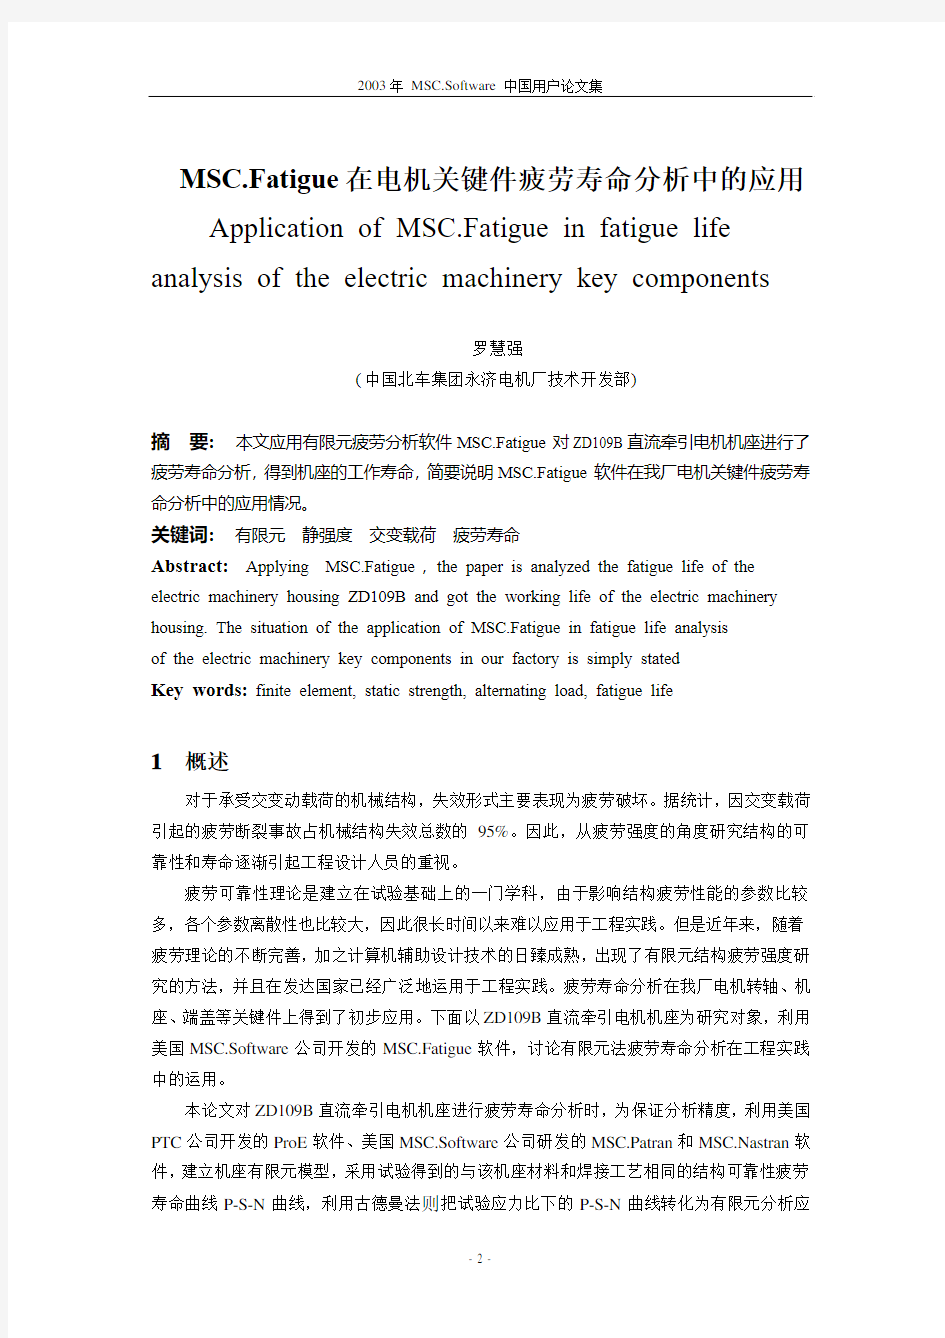 MSC.Fatigue在电机关键件疲劳寿命分析中的应用